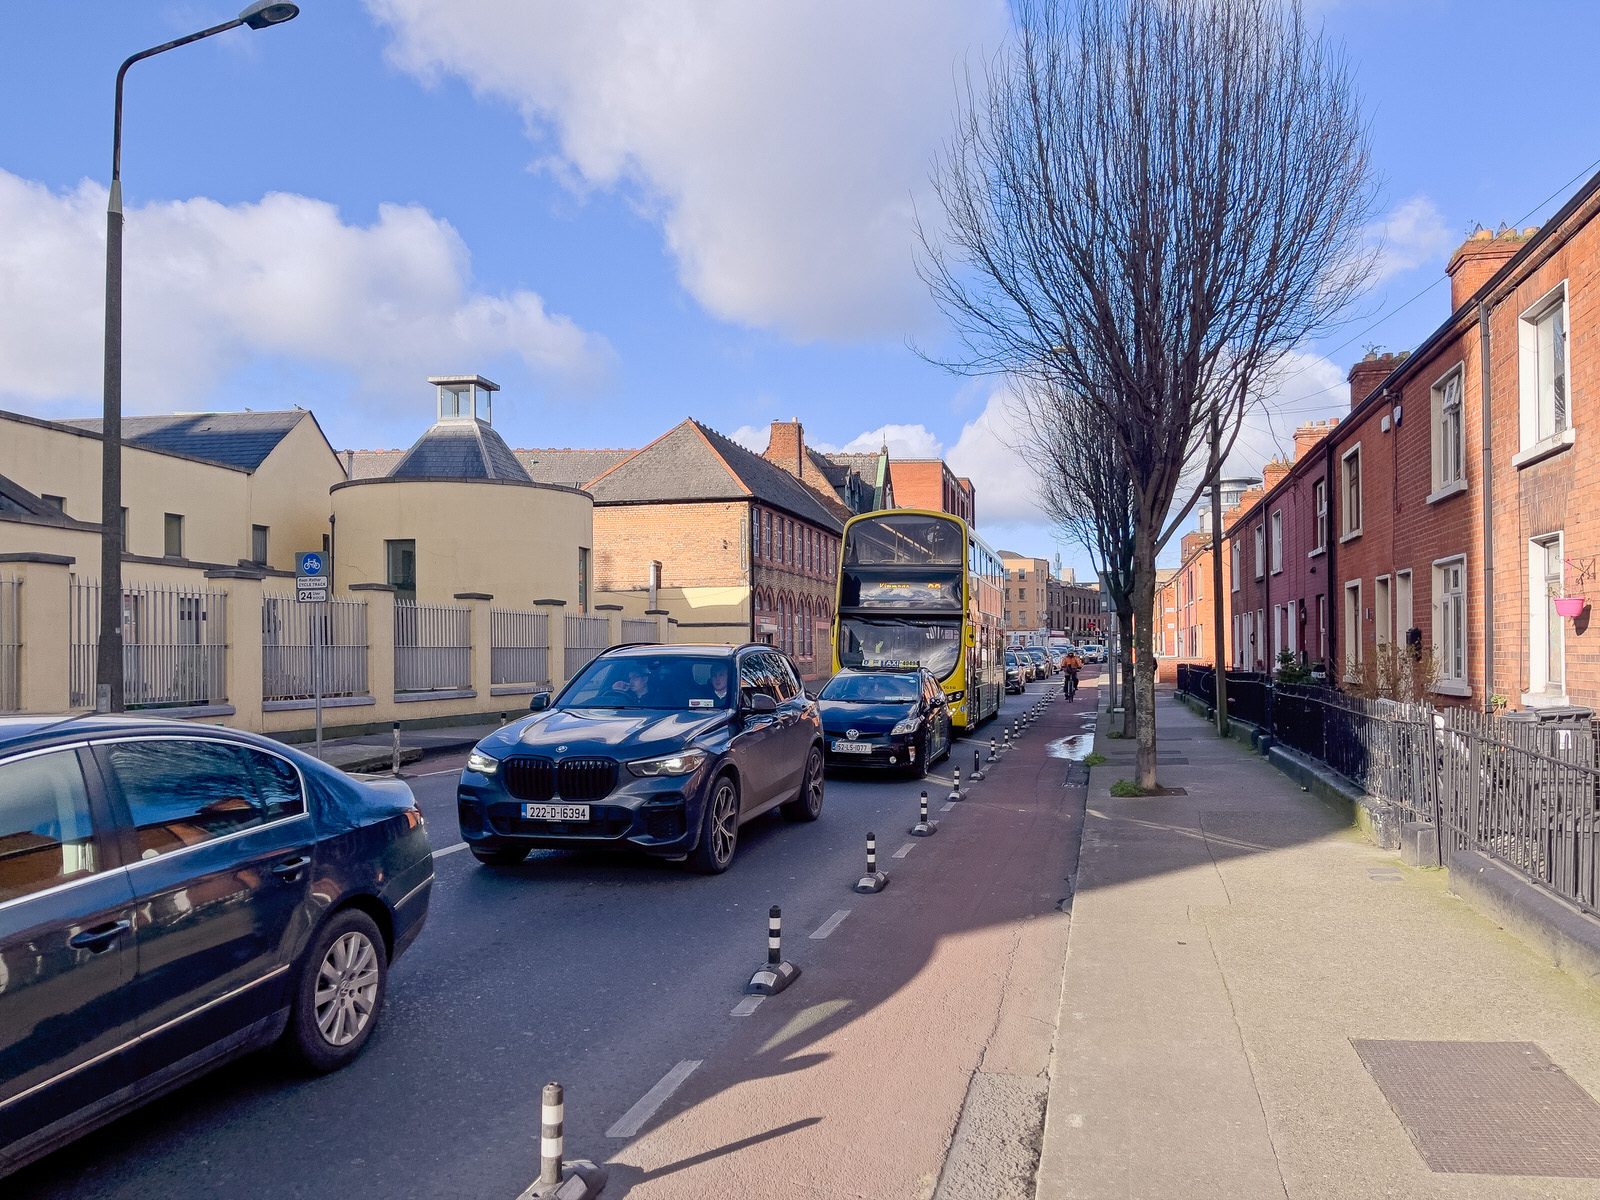 CHURCH STREET IN DUBLIN [HAS A RICH AND COMPLEX HISTORY]-228438-1